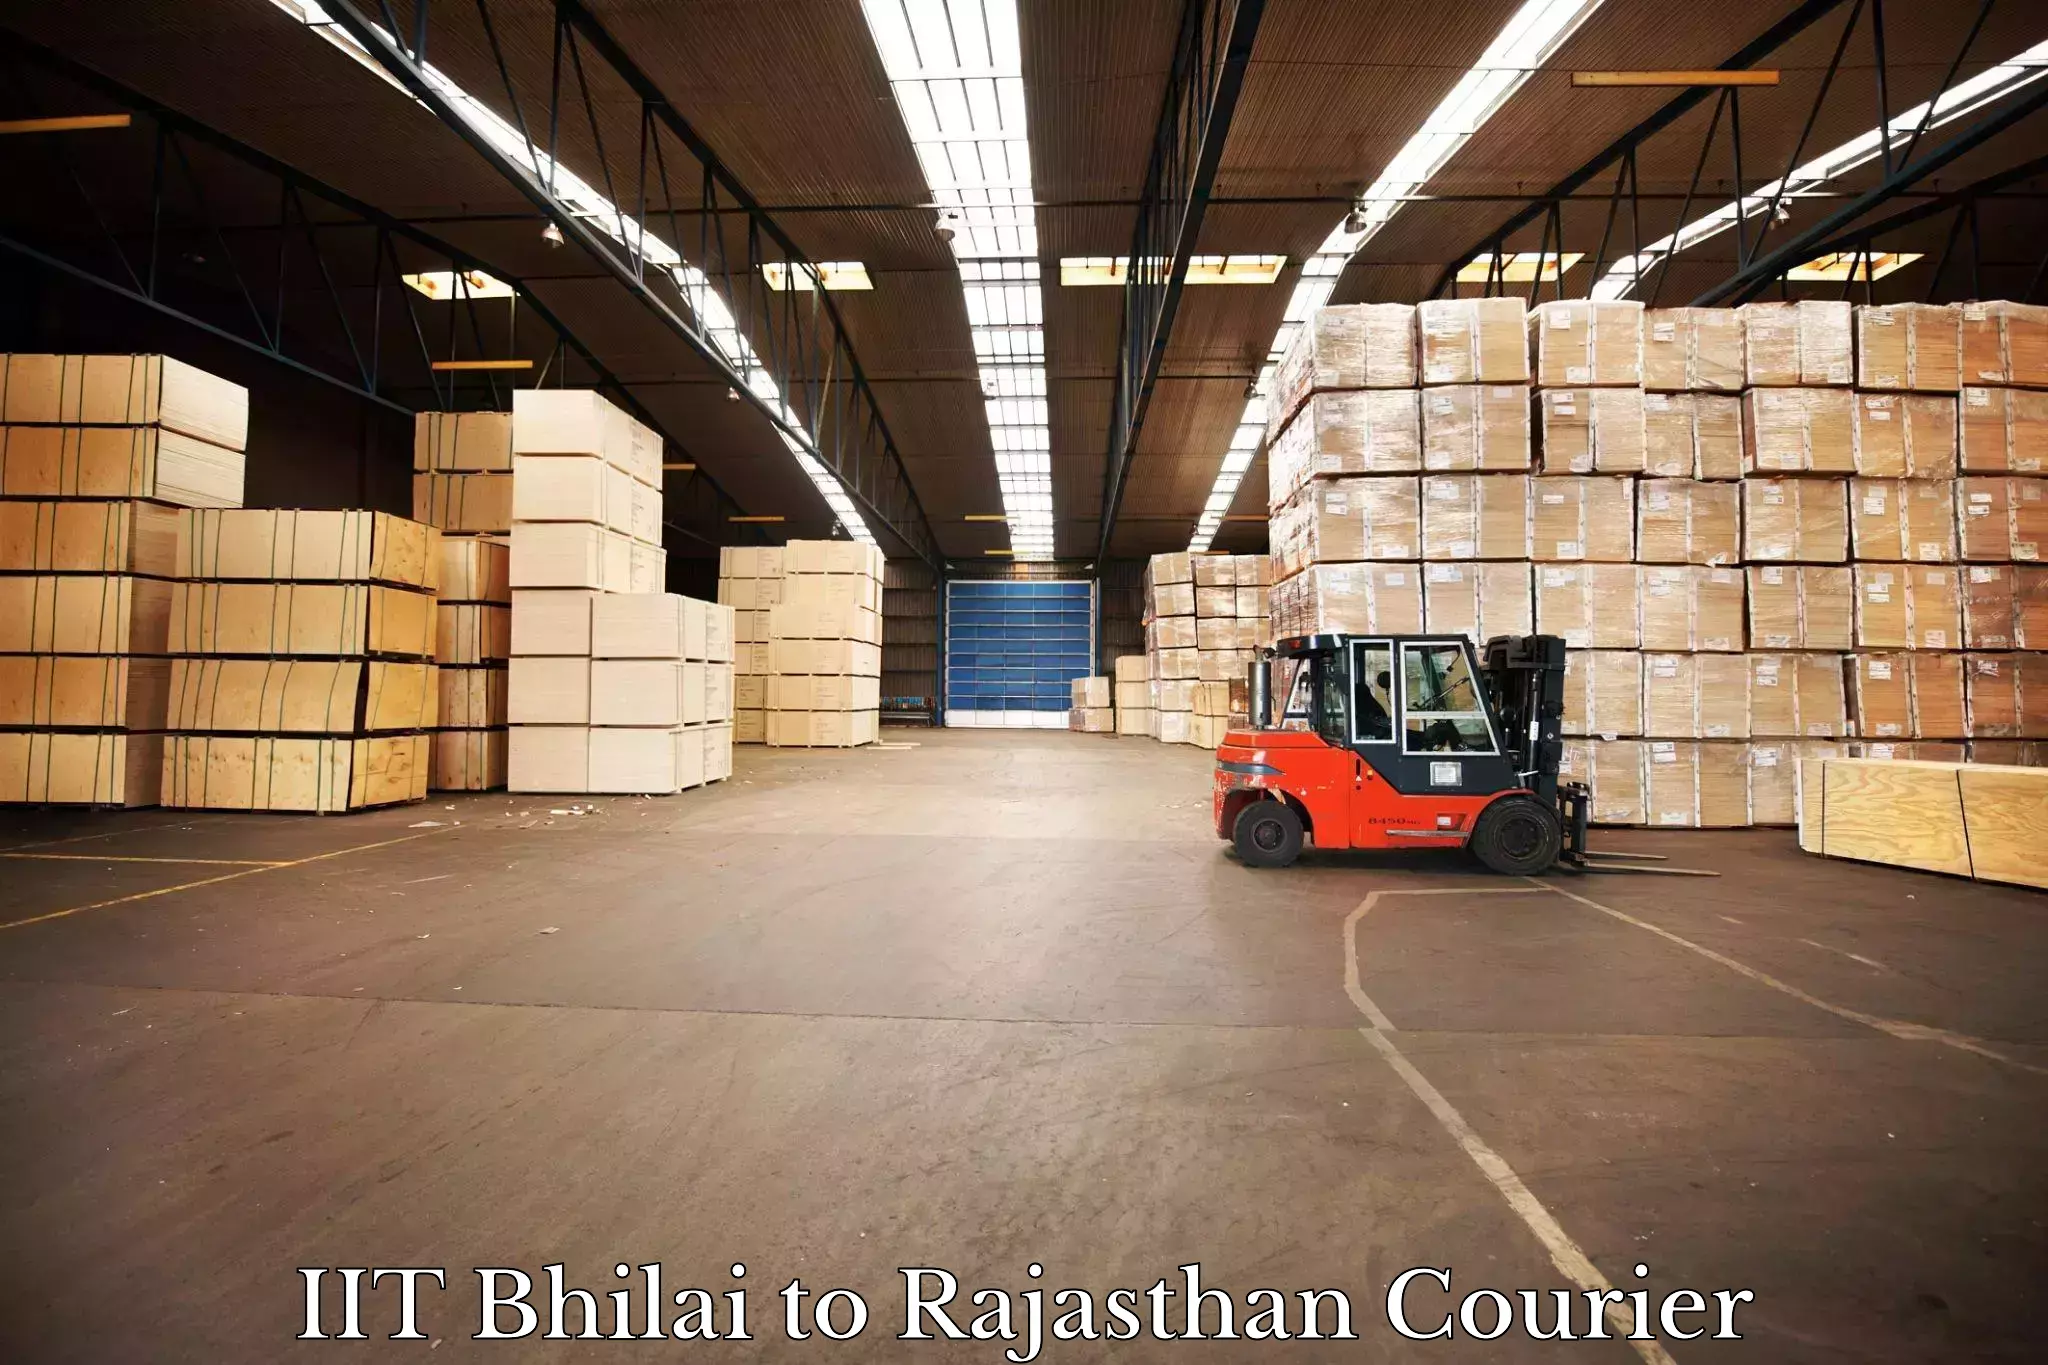 Courier service partnerships IIT Bhilai to Lohawat